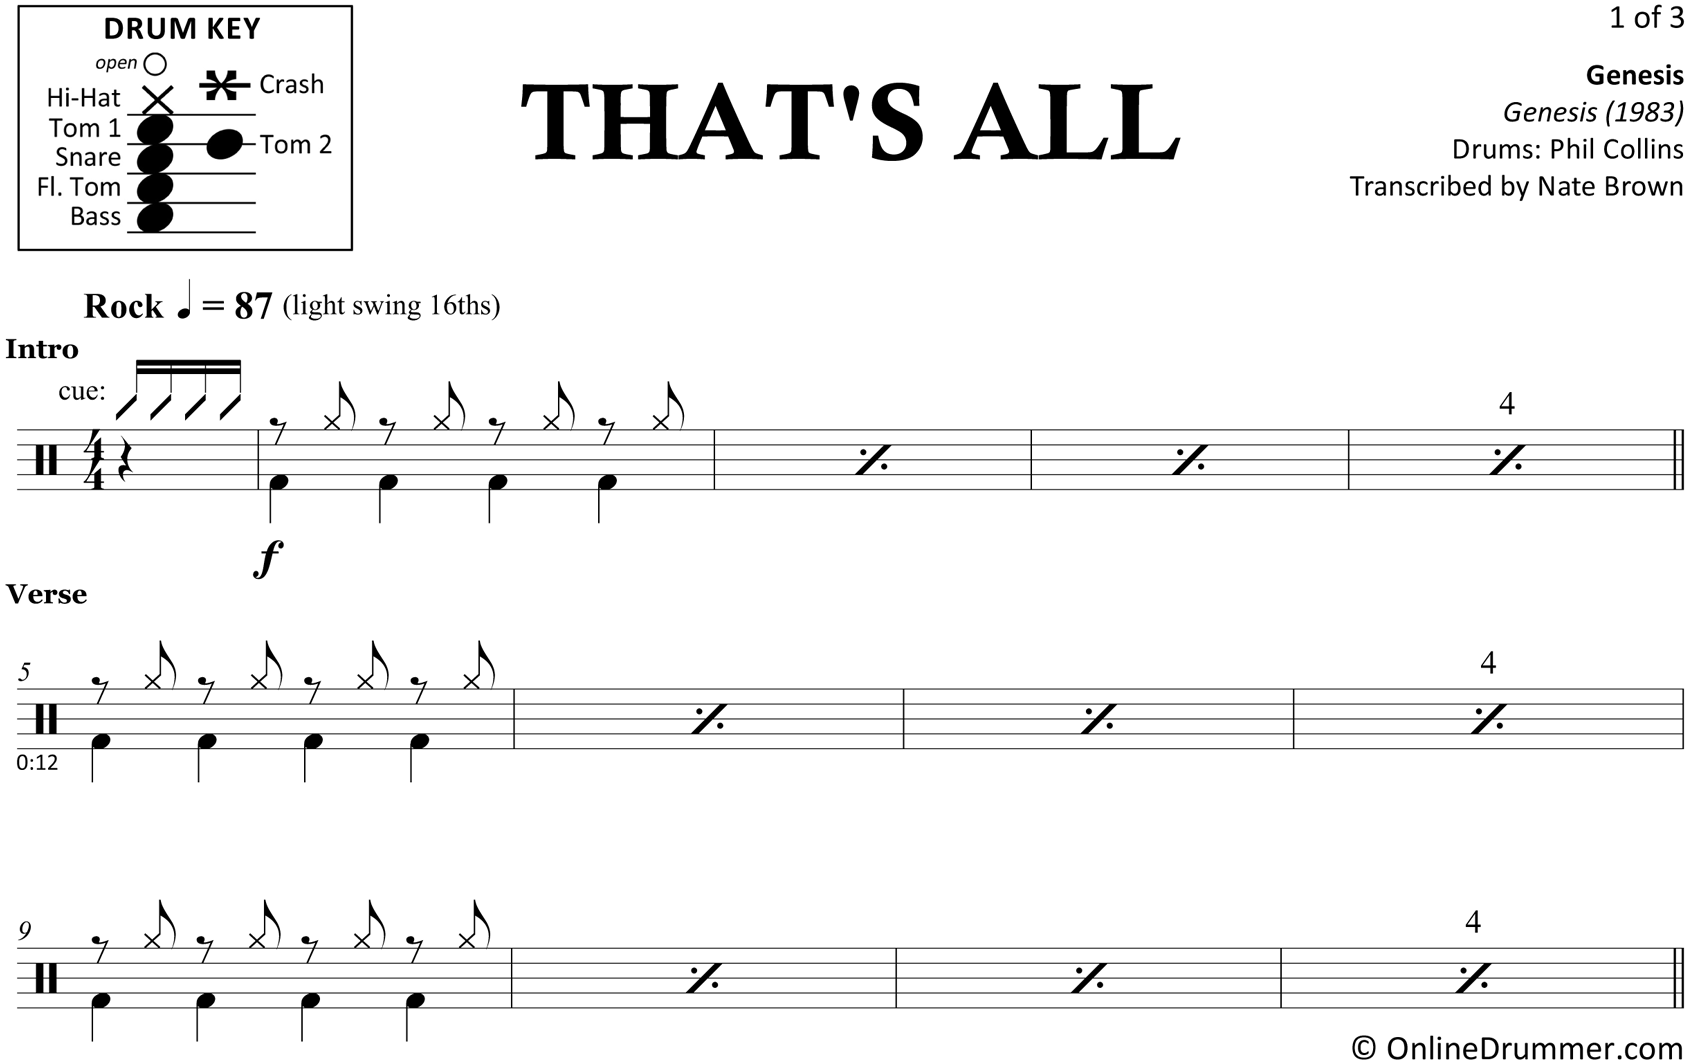 That's All - Genesis - Drum Sheet Music